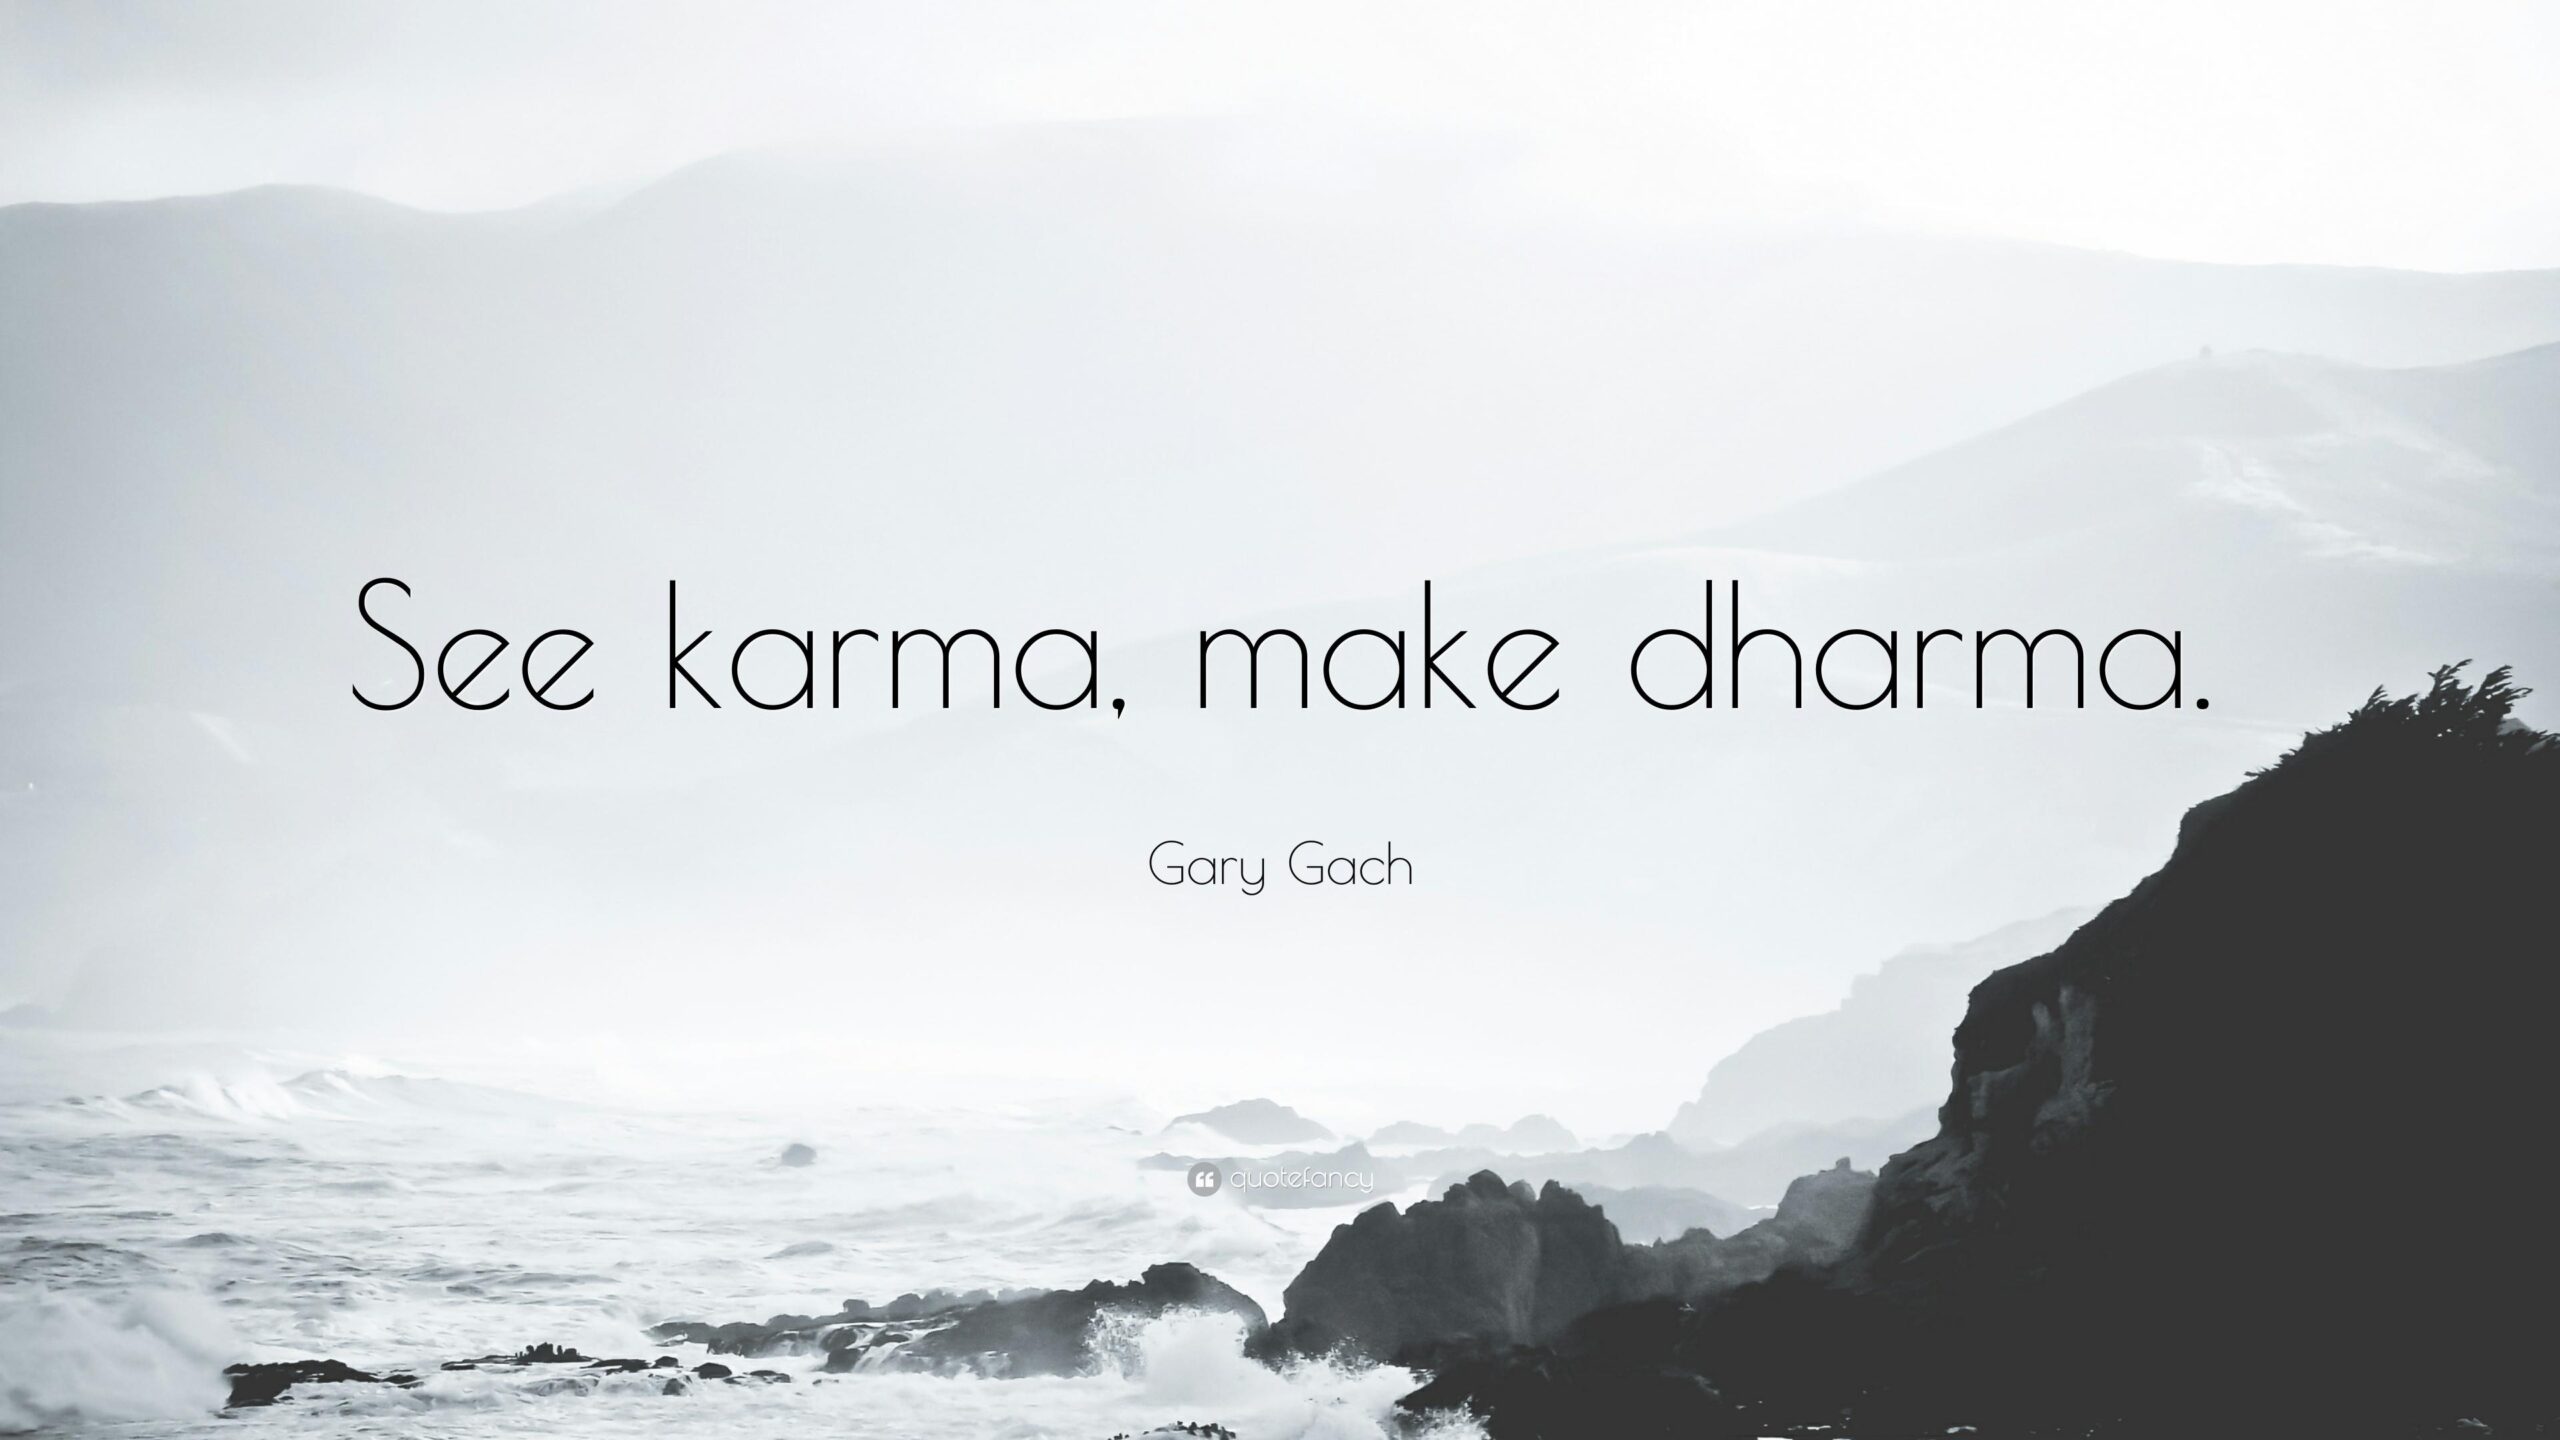 Gary Gach Quote “See karma, make dharma”